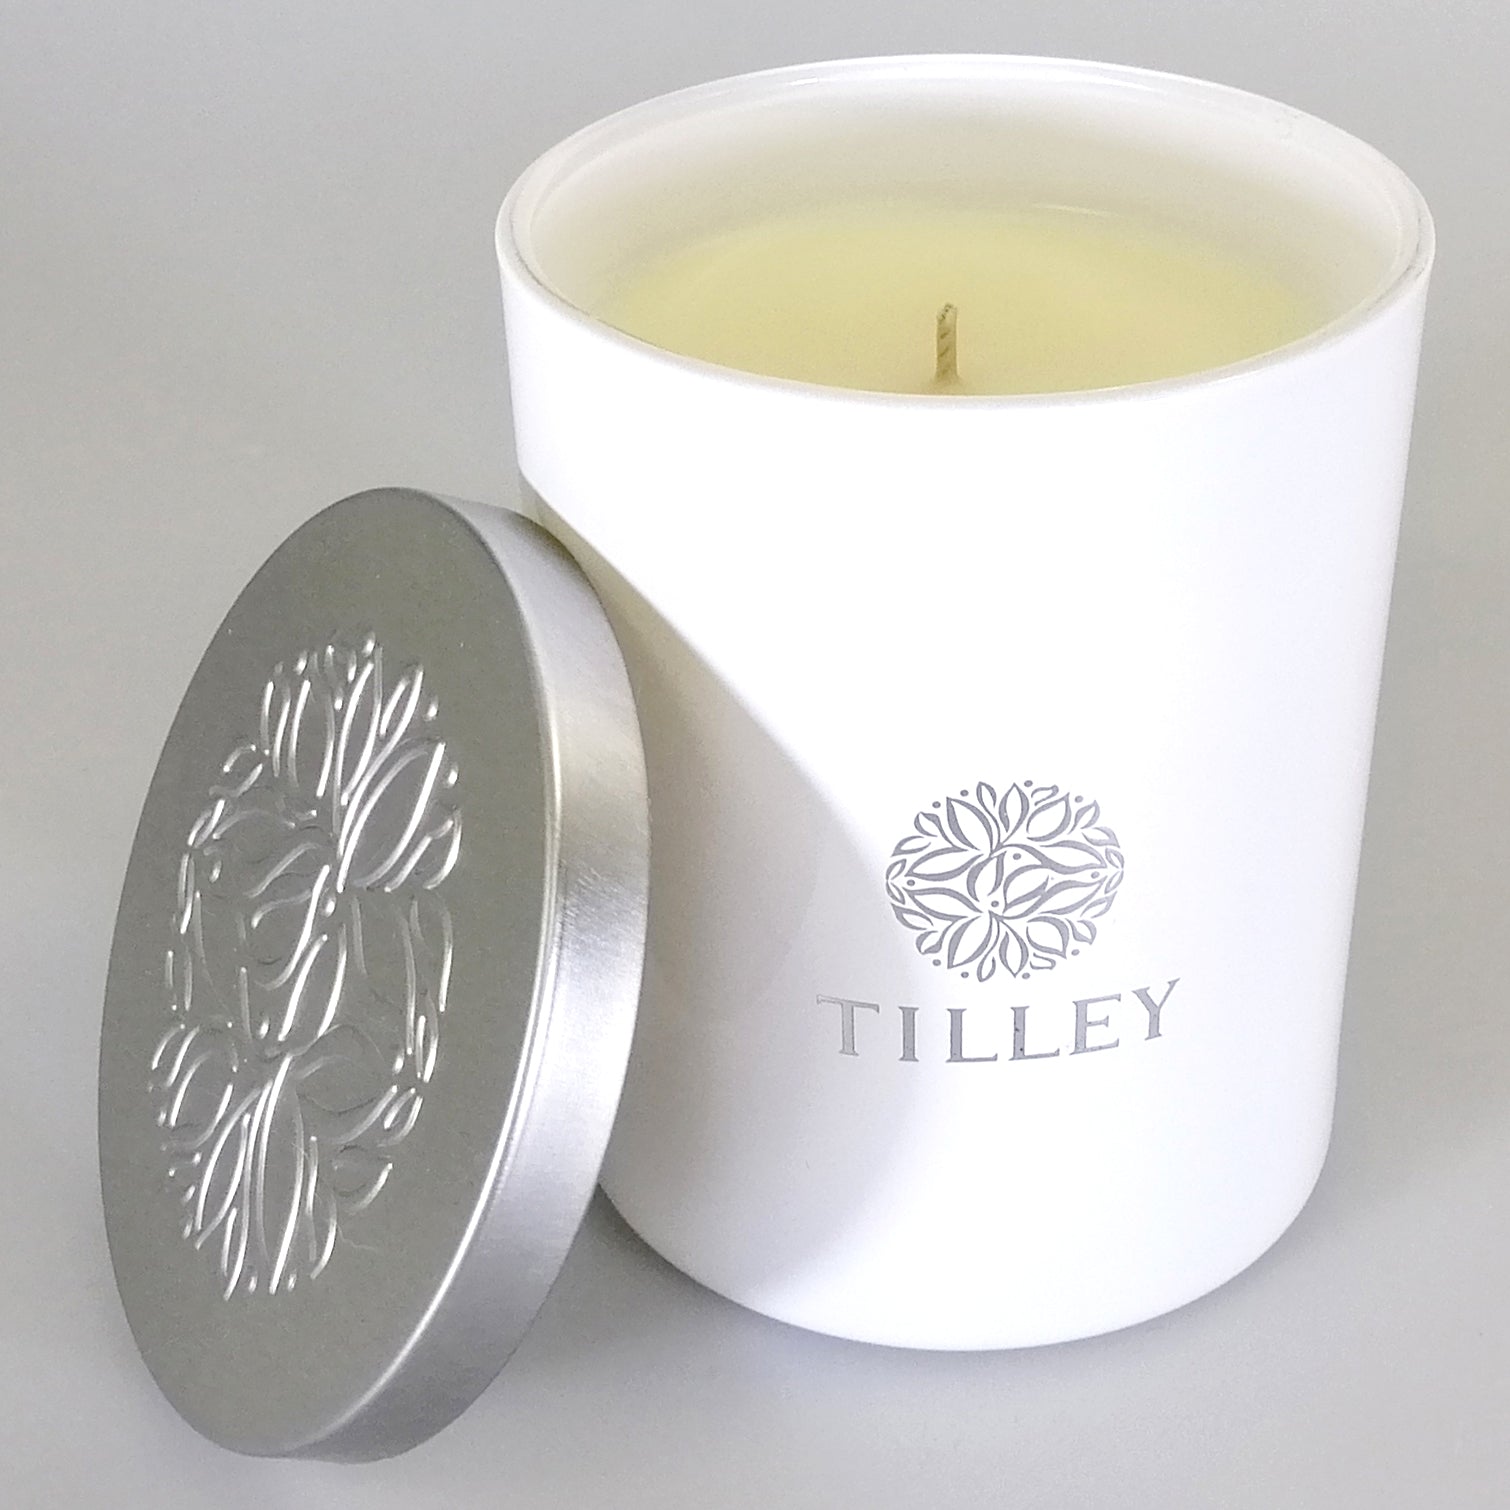 Tilley Soy Scented Candle - Orange Blossom